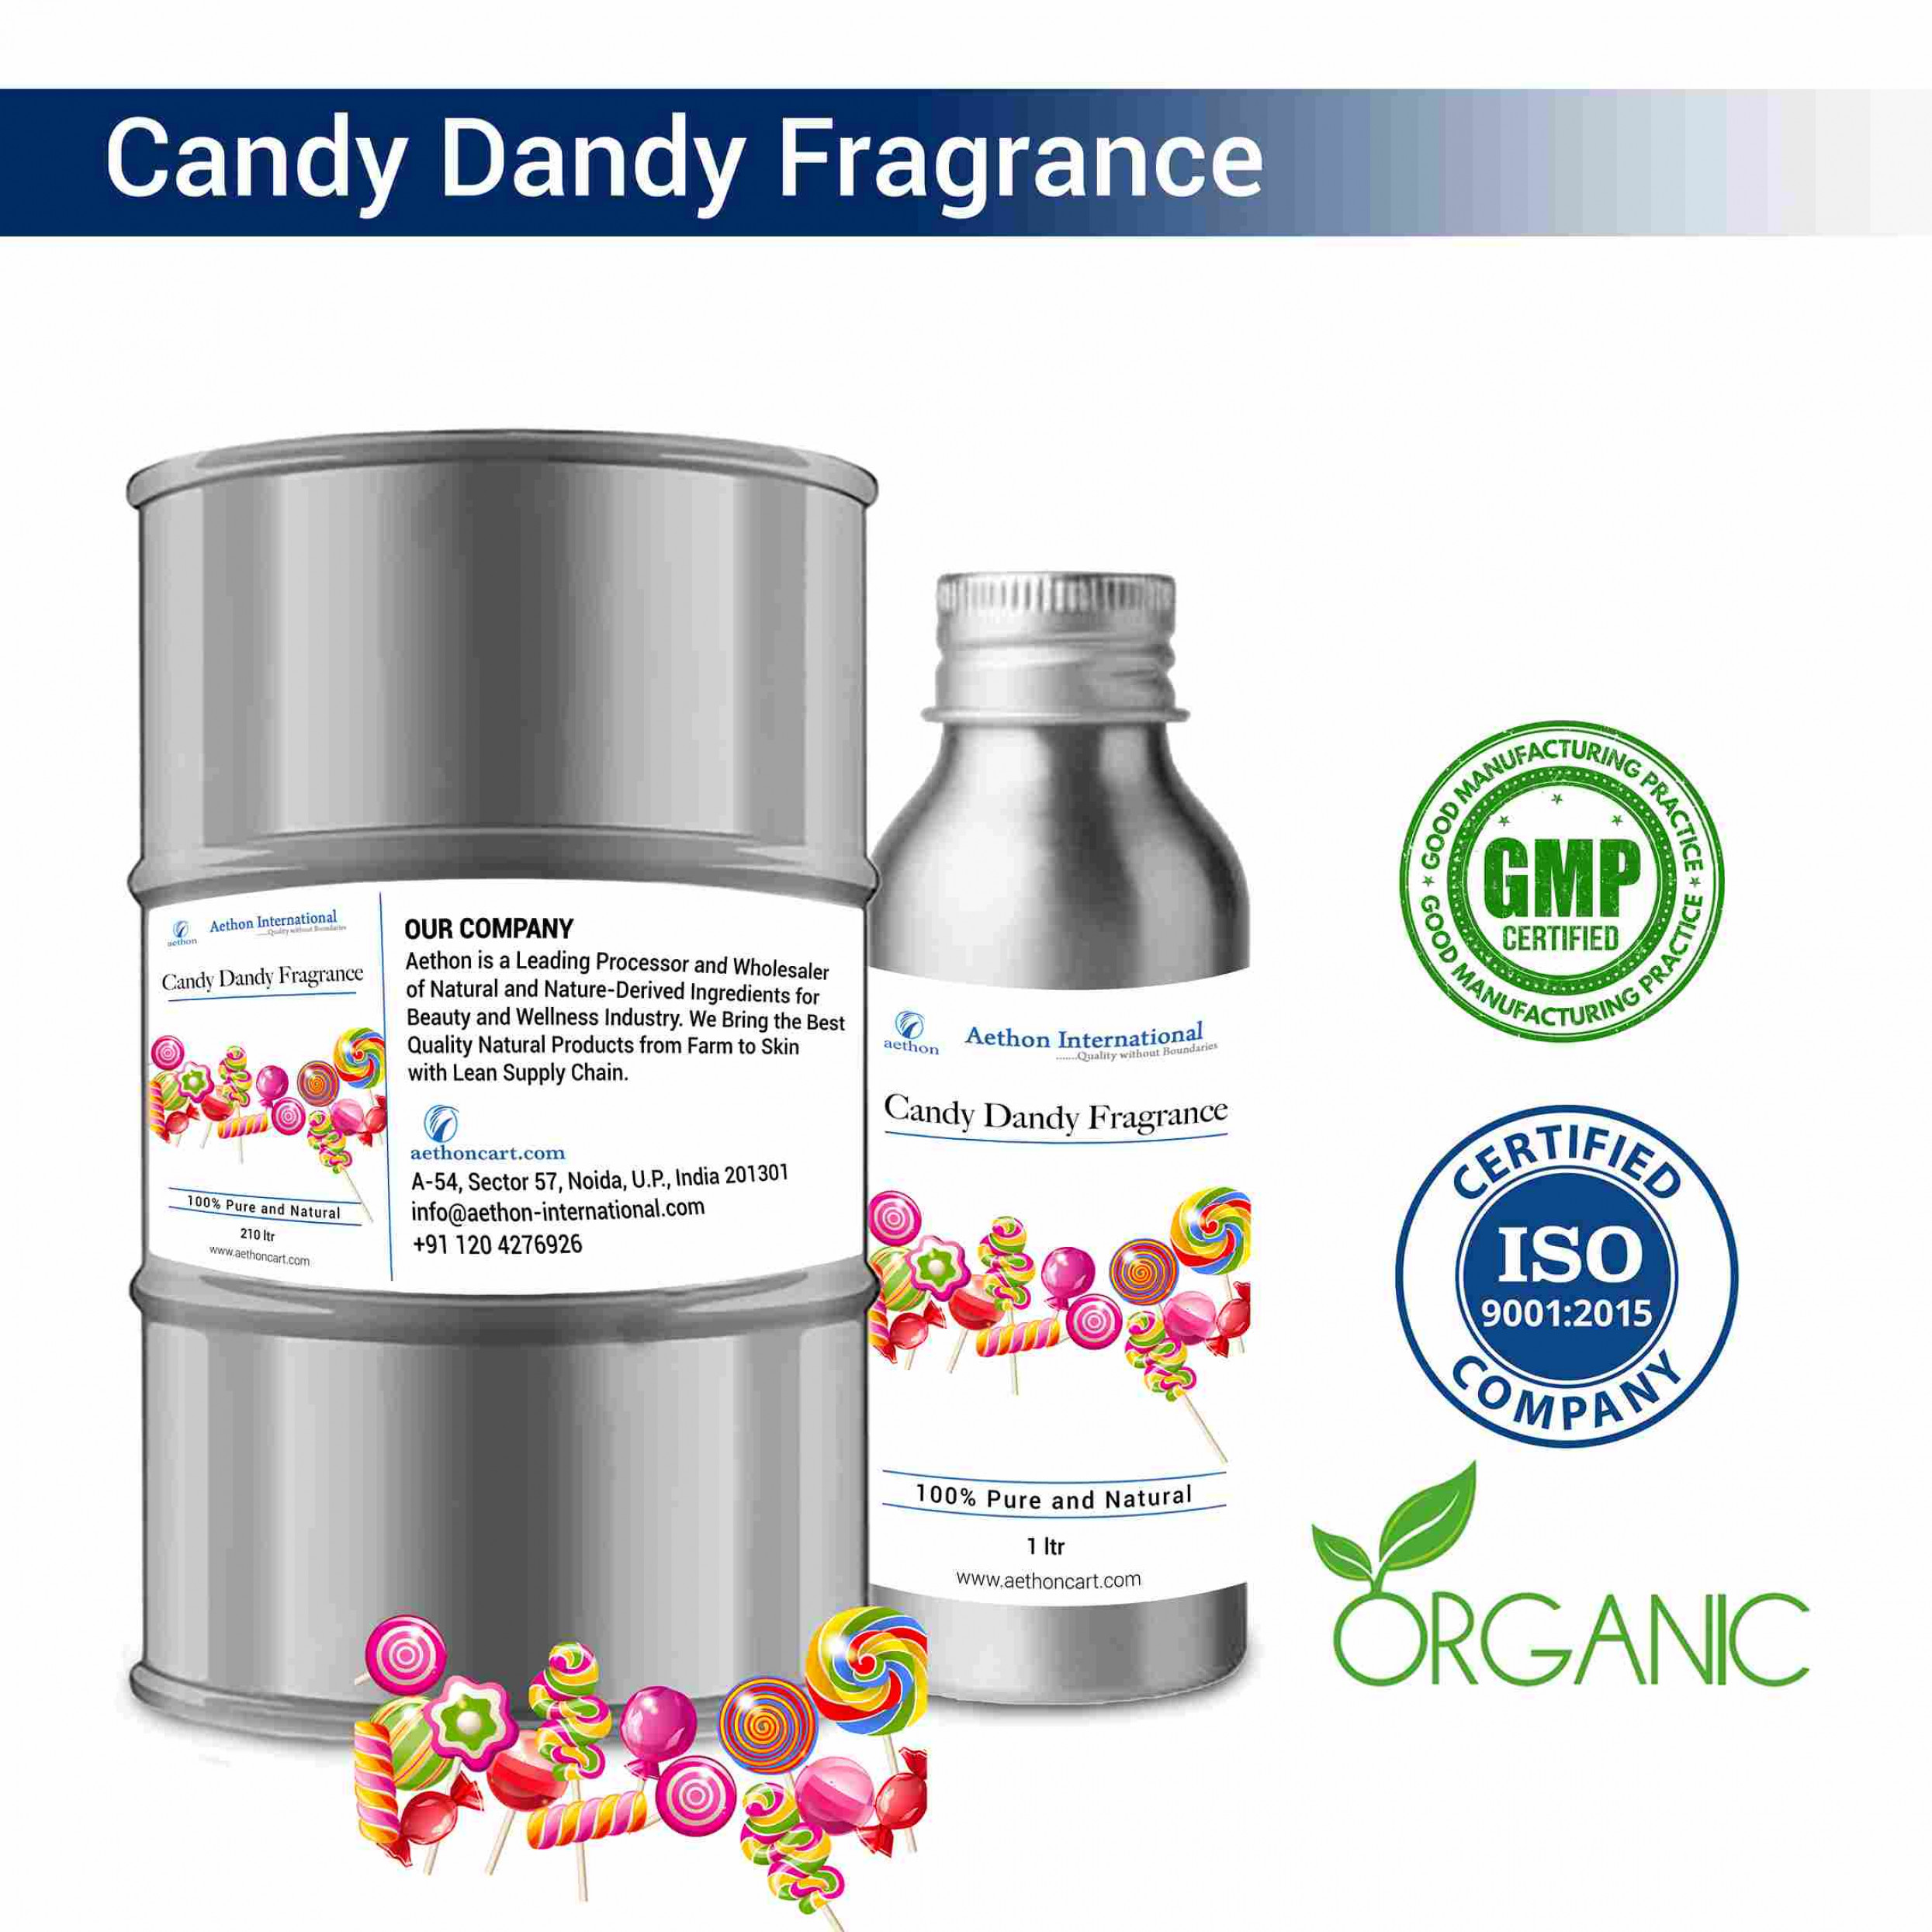 Candy Dandy Fragrance